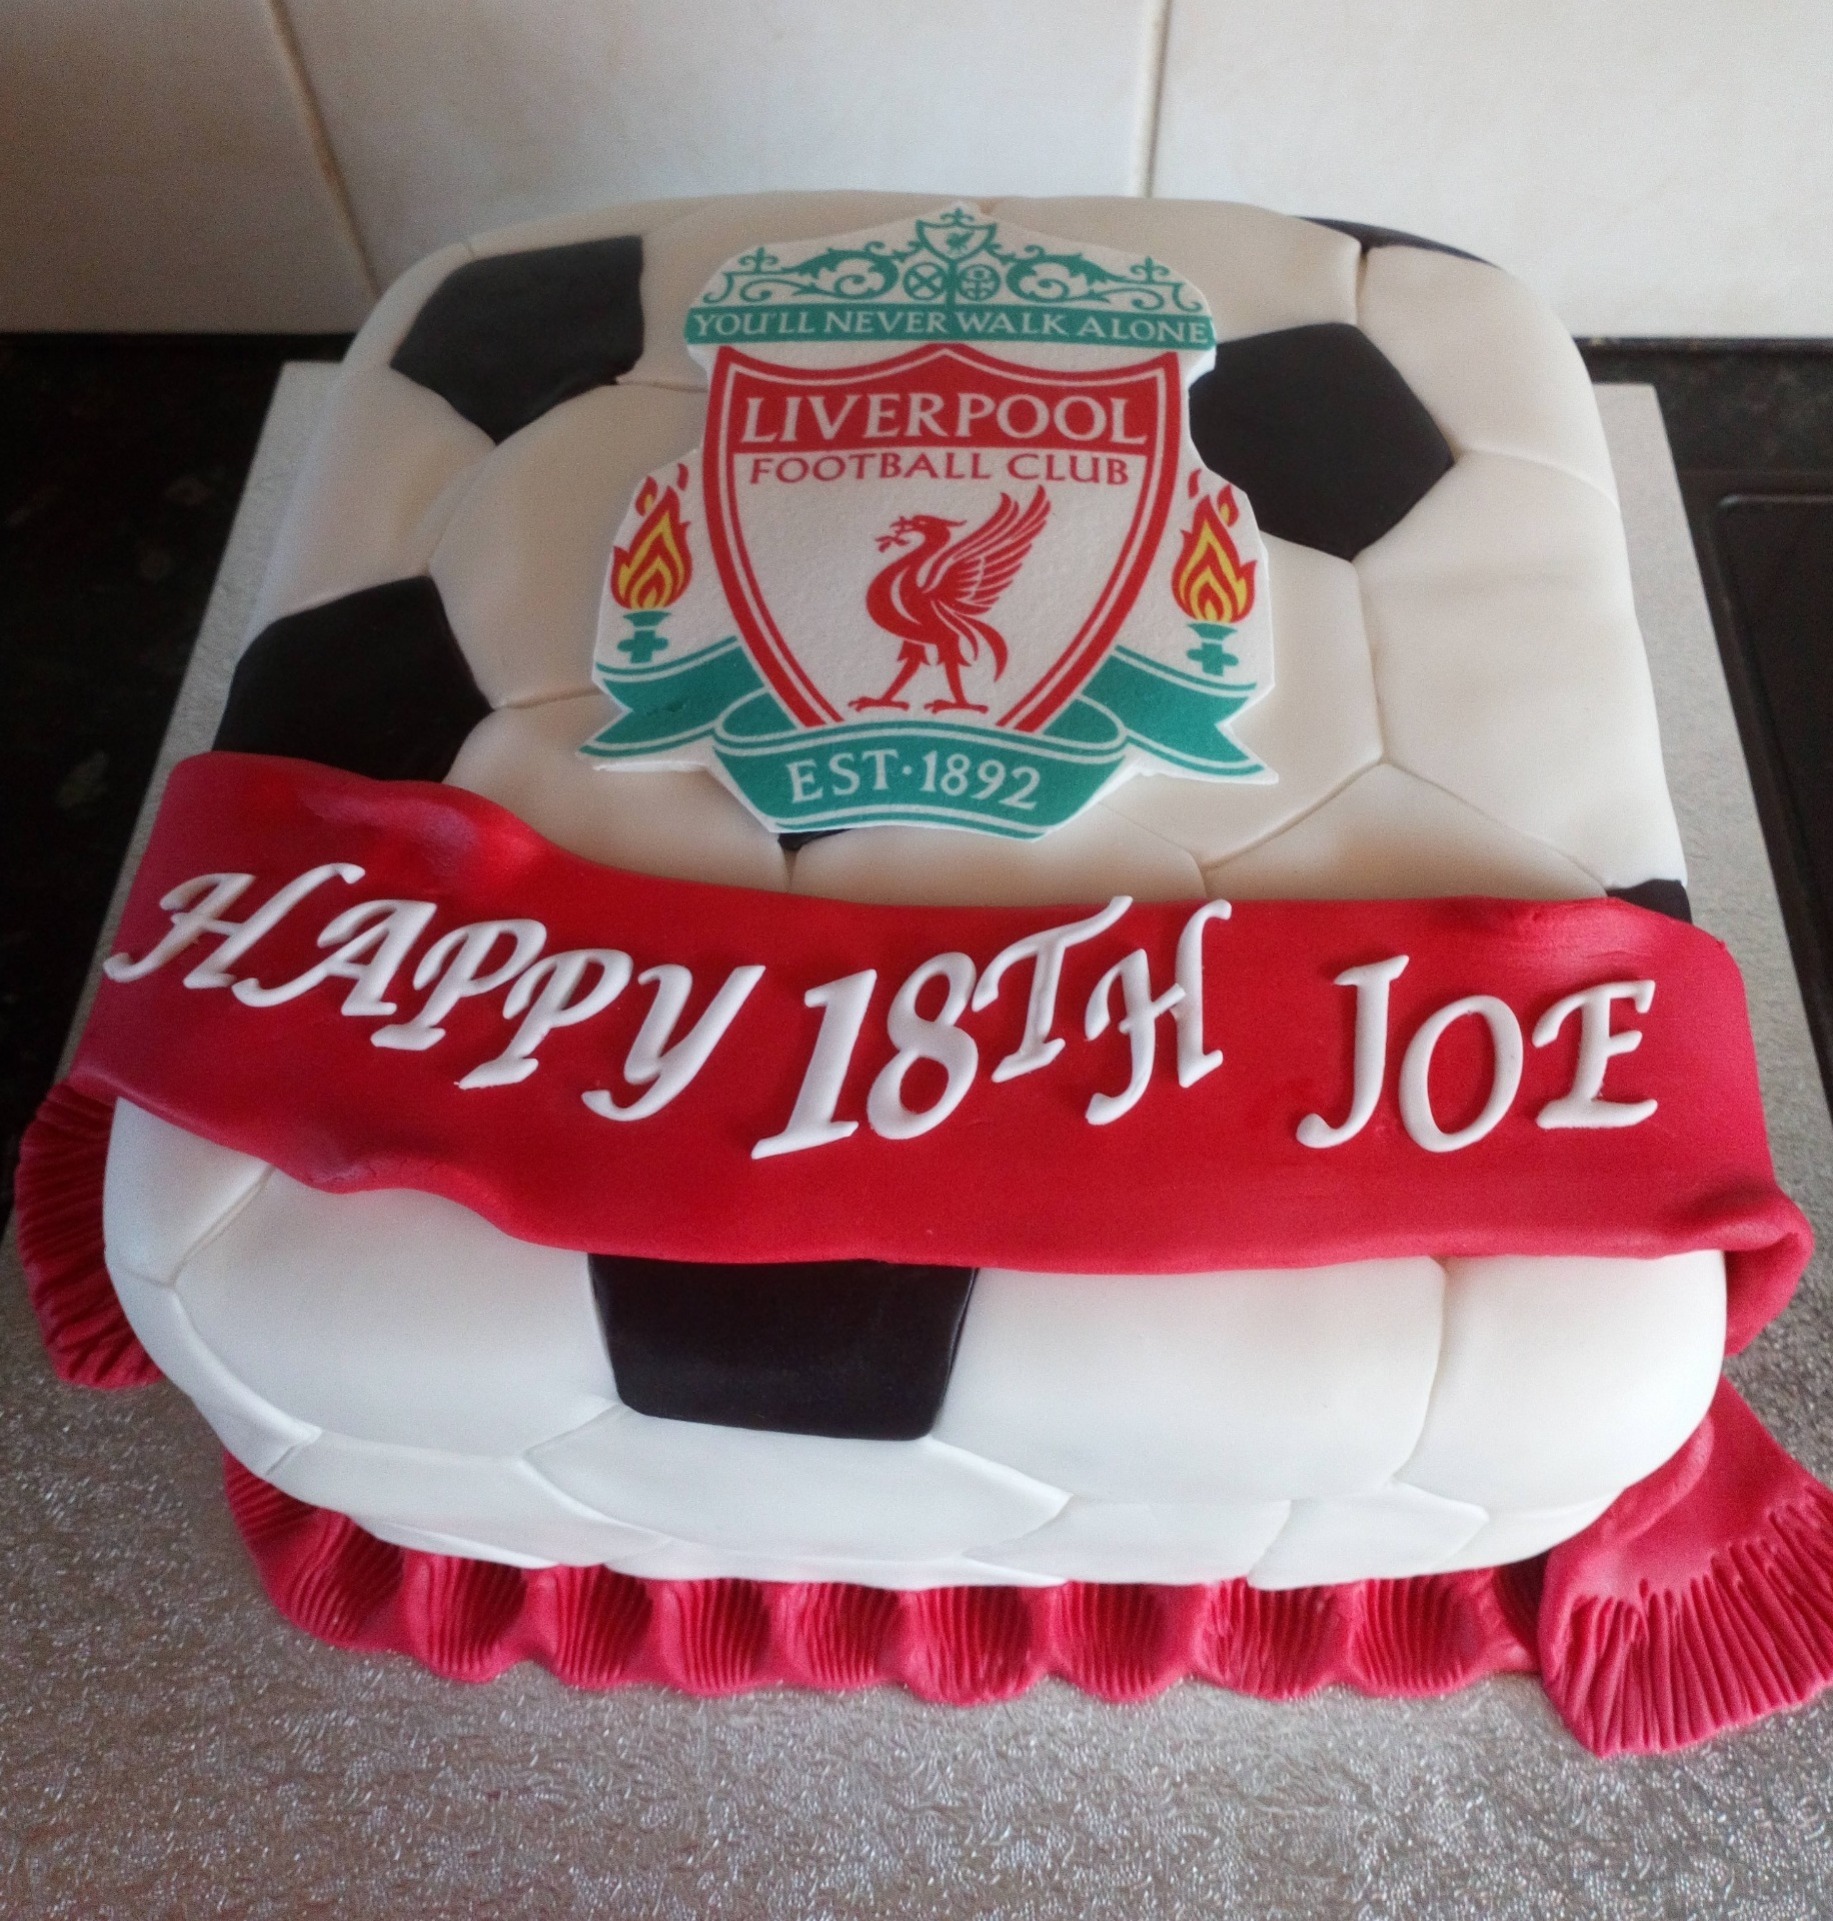 Mens "Liverpool" football club birthday cake